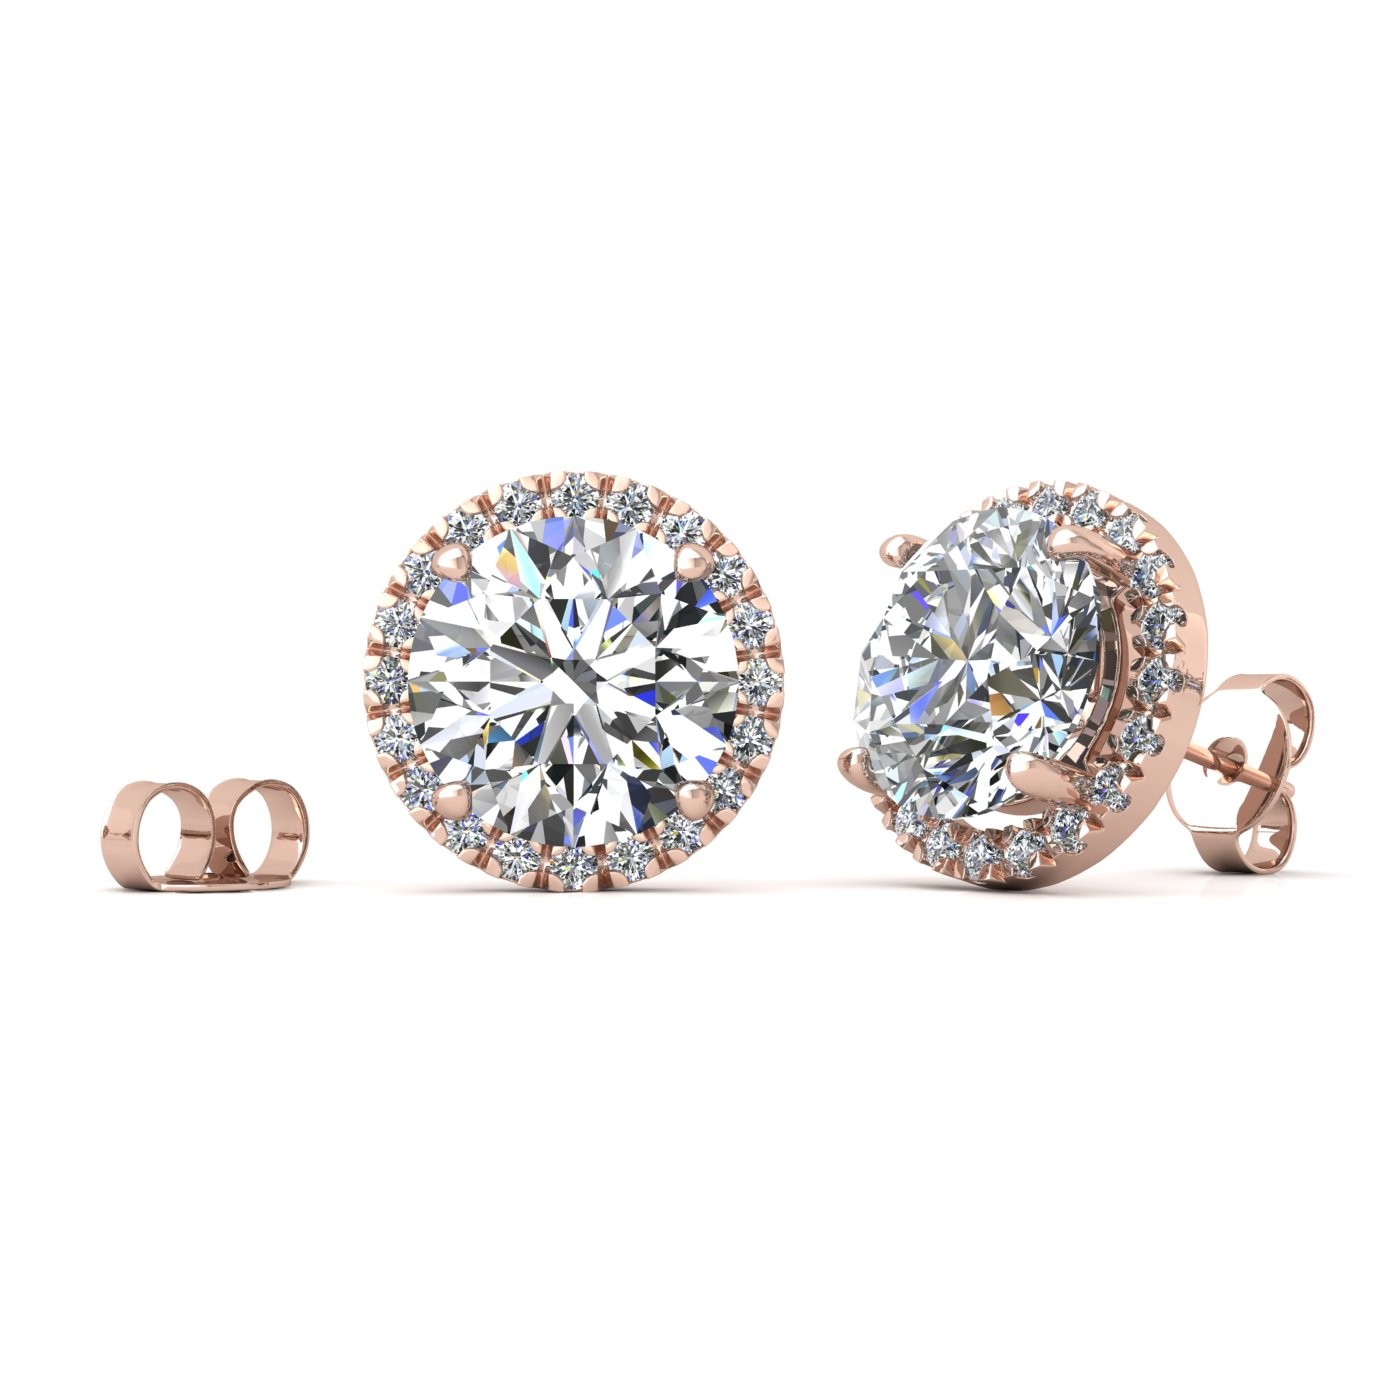 18k rose gold 2 ct each (4,0 tcw) 4 prongs round shape diamond earrings with diamond pavÉ set halo